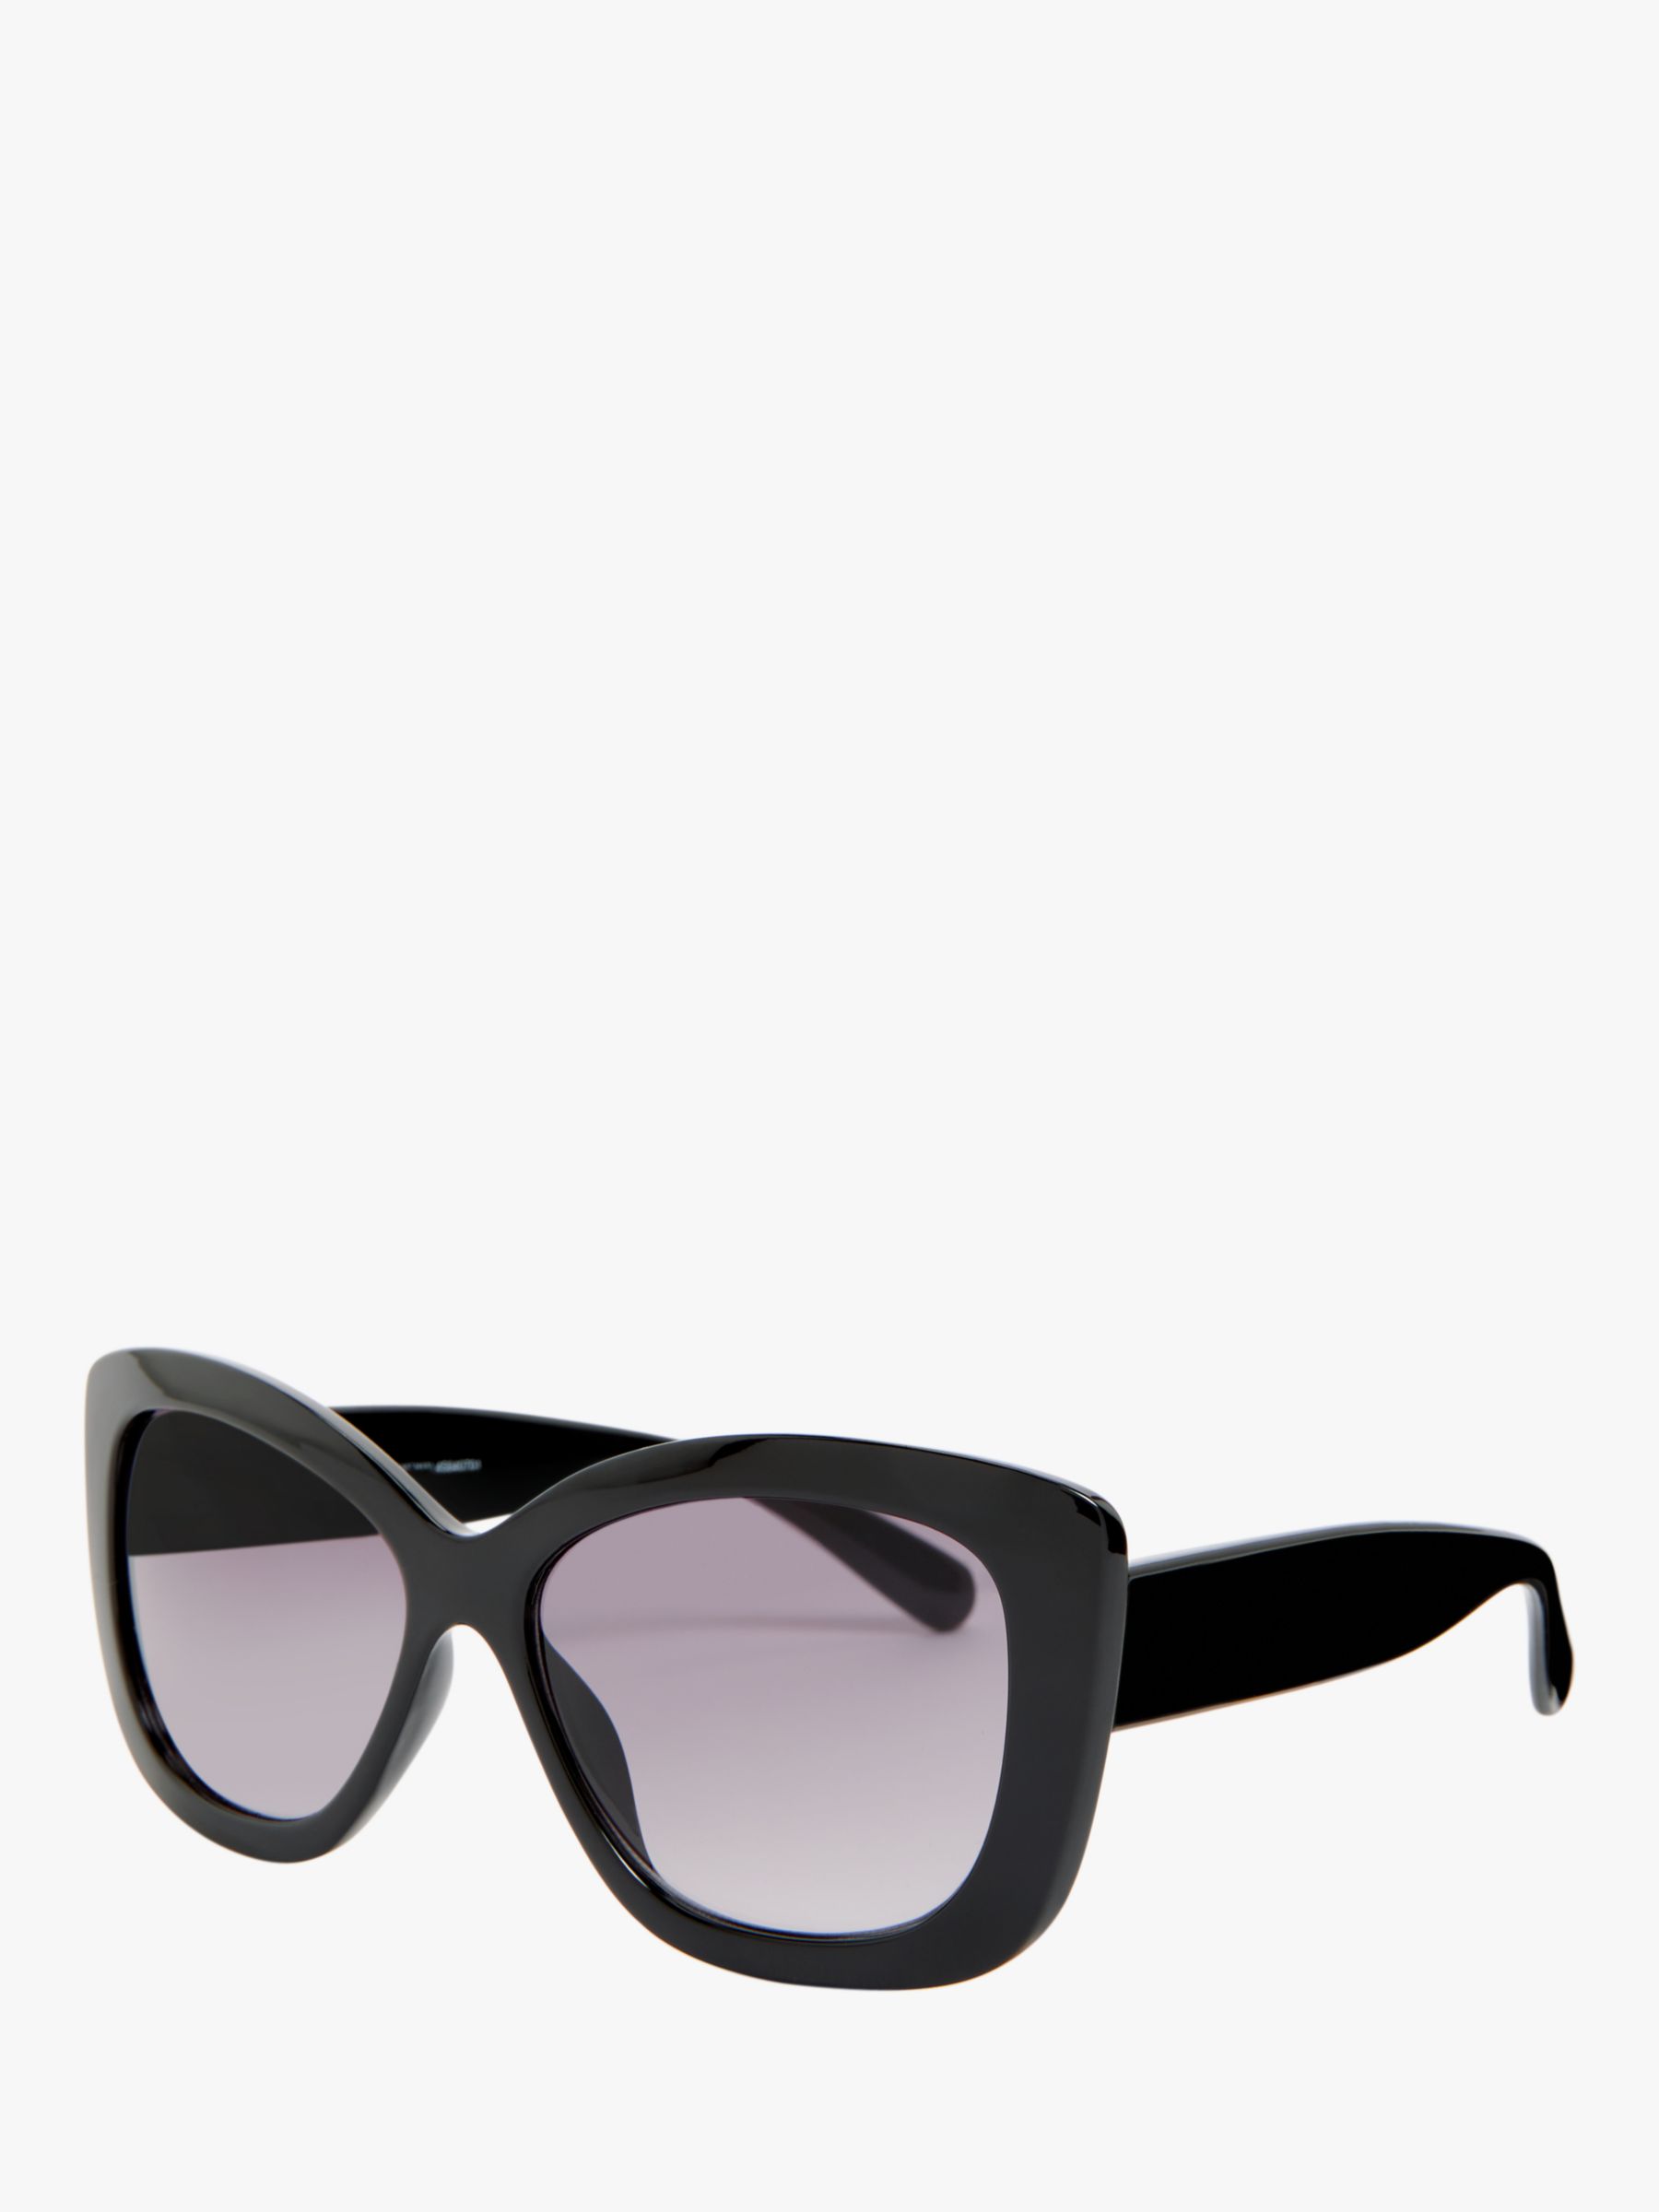 John Lewis Women's Cat's Eye Sunglasses, Black/Purple Gradient